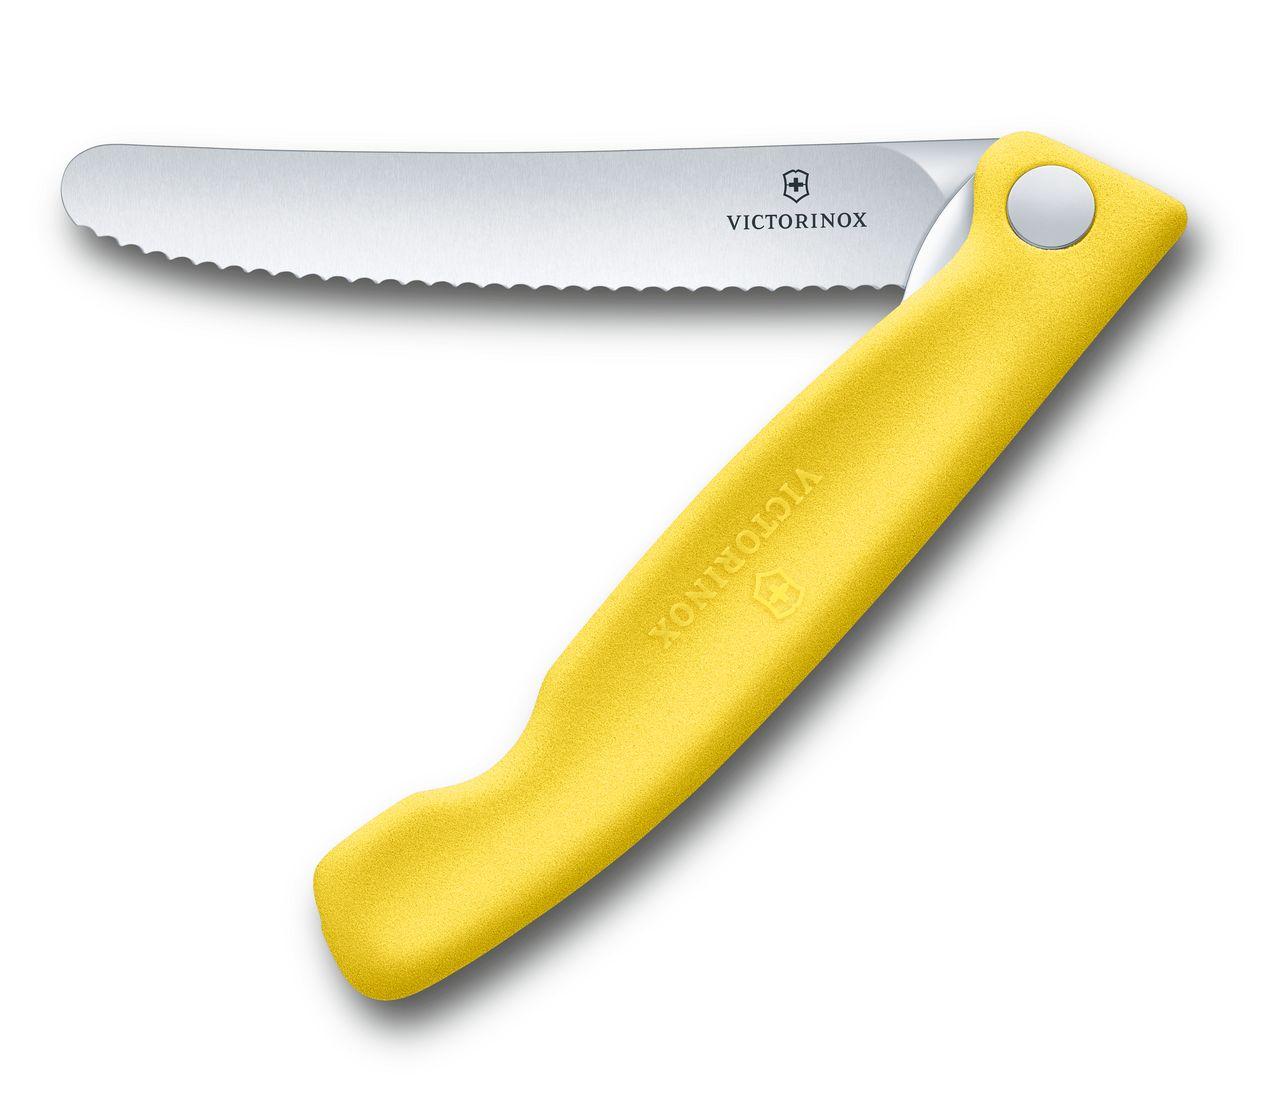 Victorinox paring knife 6.7730